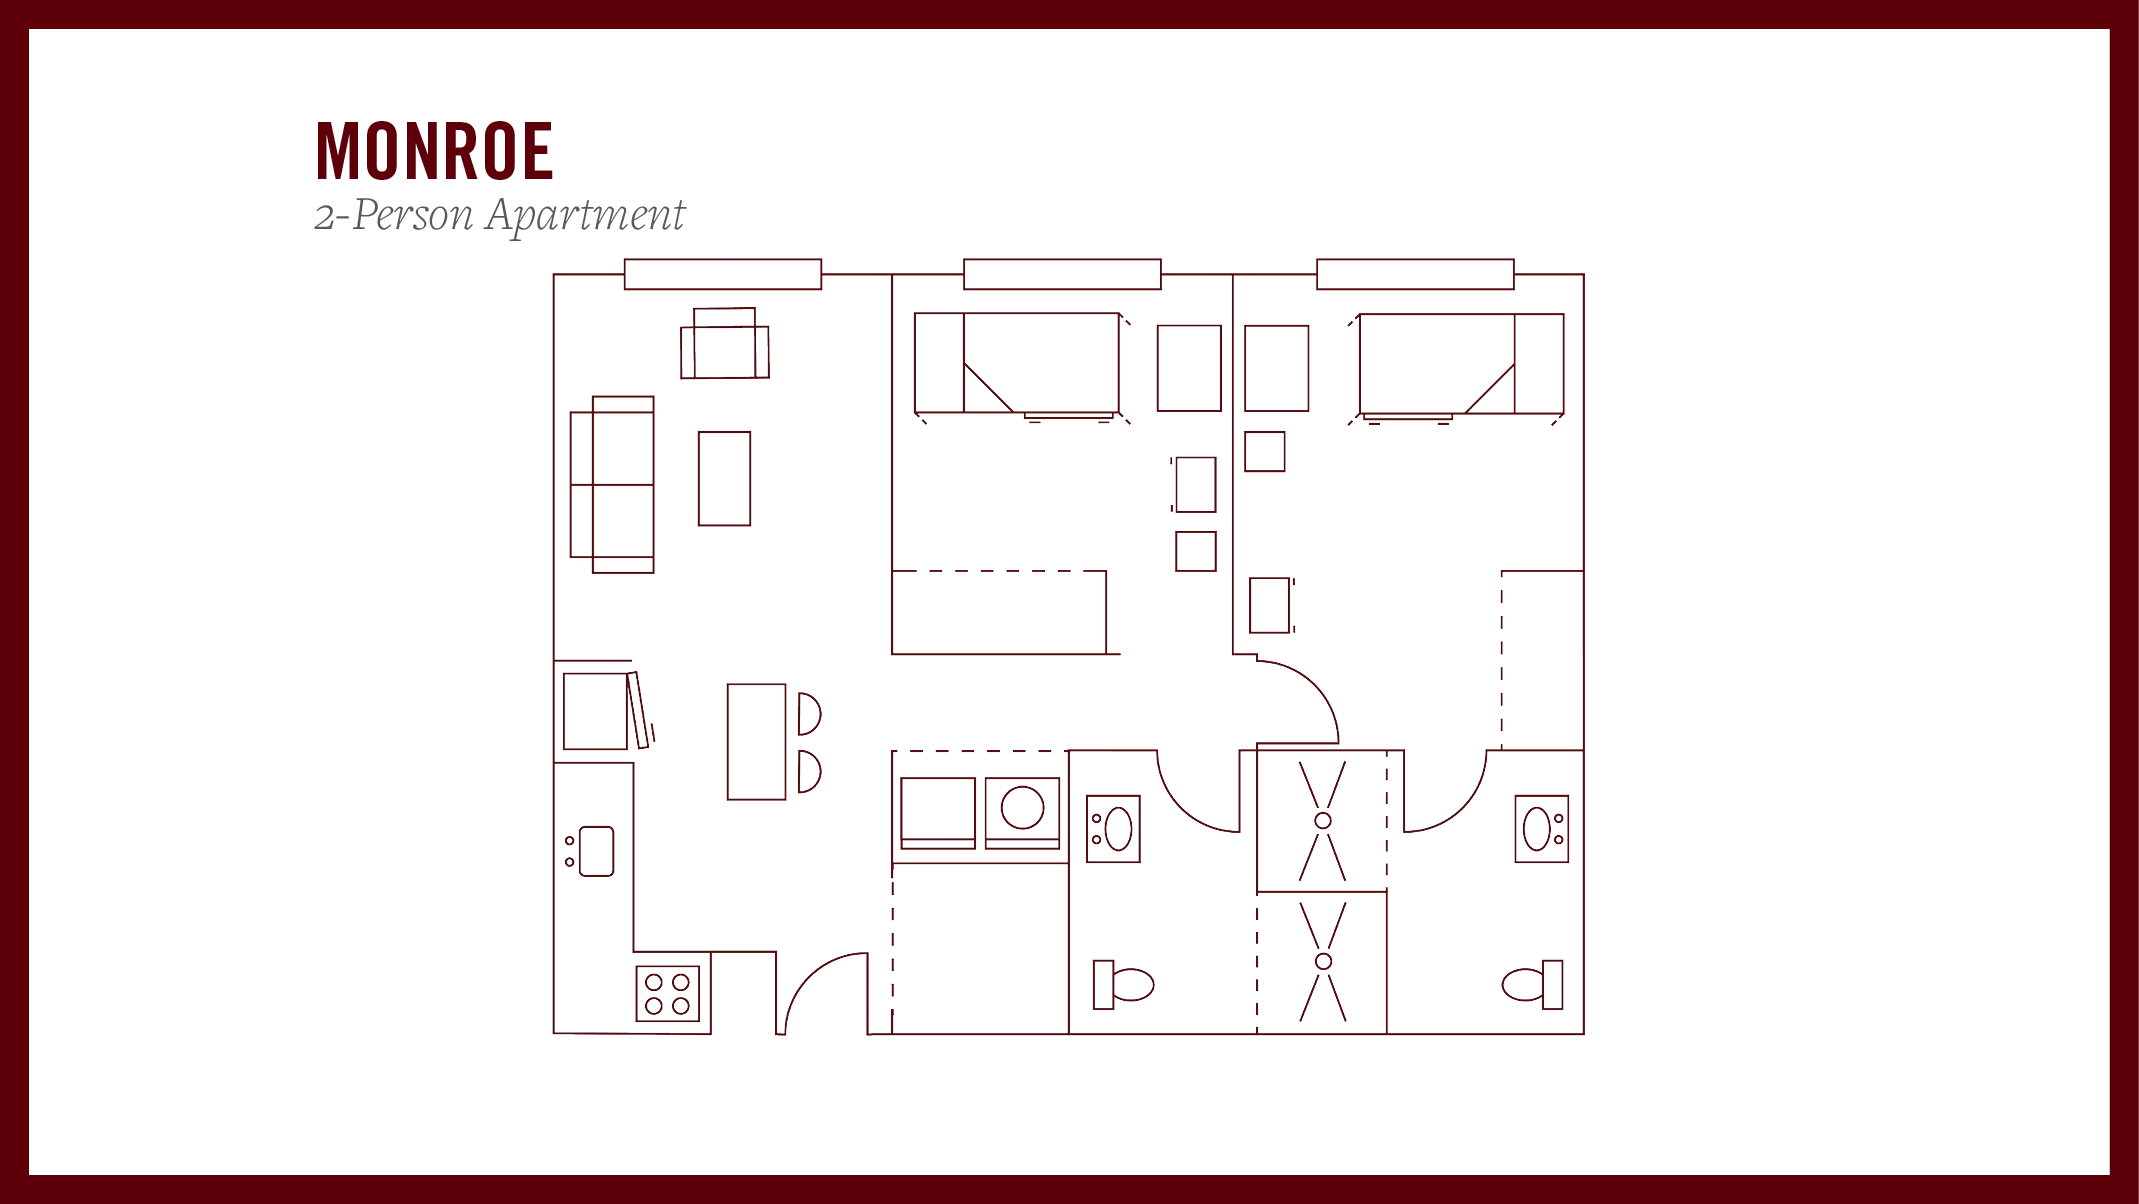 Monroe 2-person Apartment